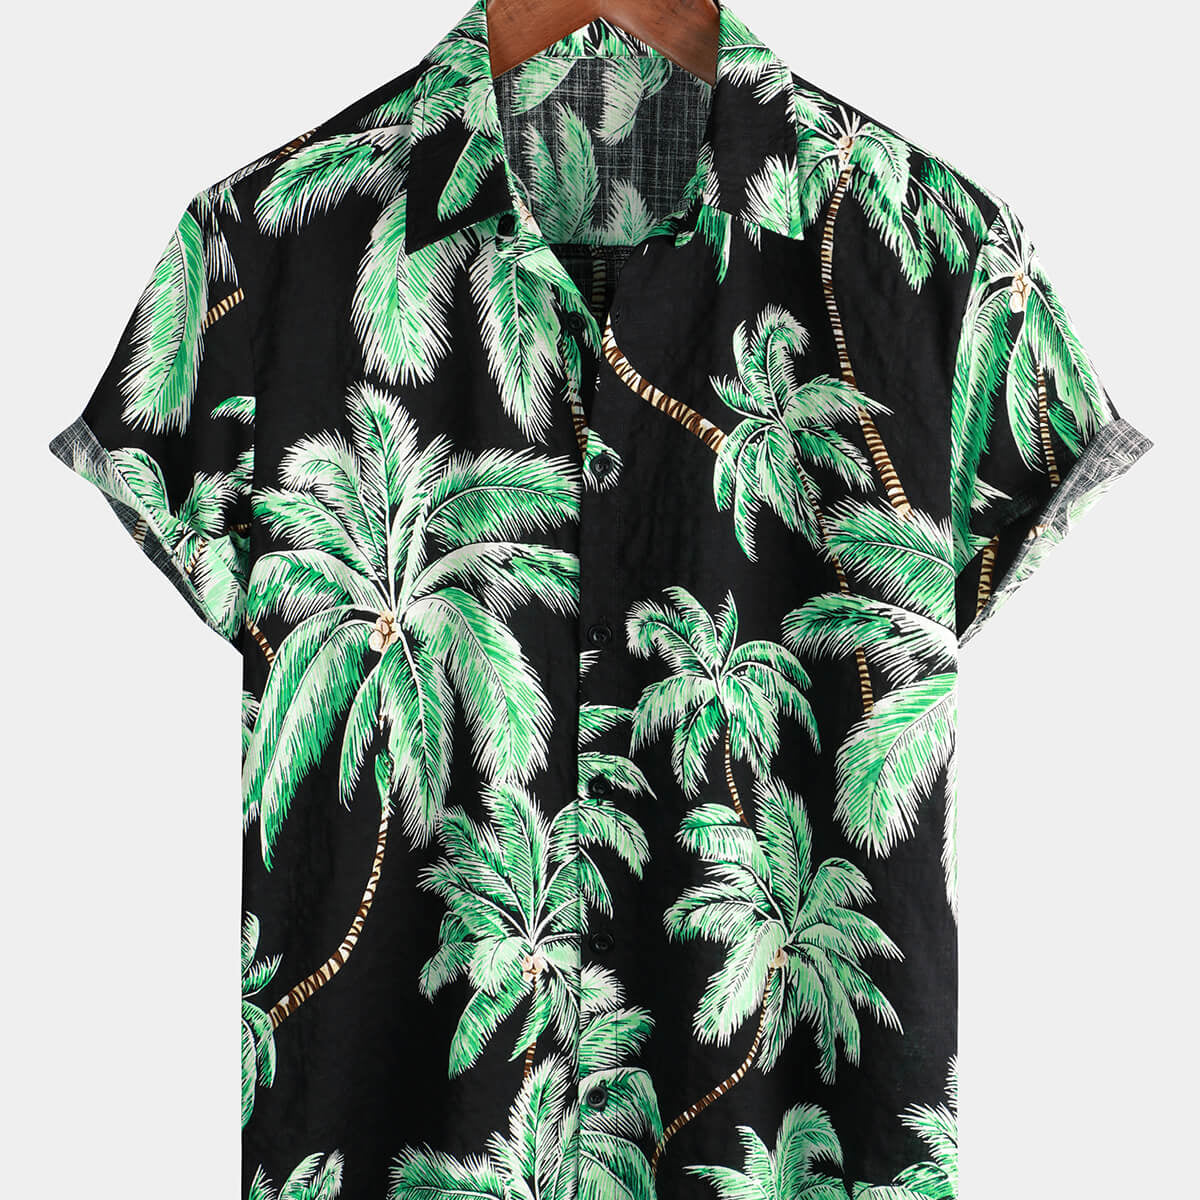 Chemise à manches courtes boutonnée pour homme Palm Tree Beach Summer Black Hawaiian Holiday Tropical